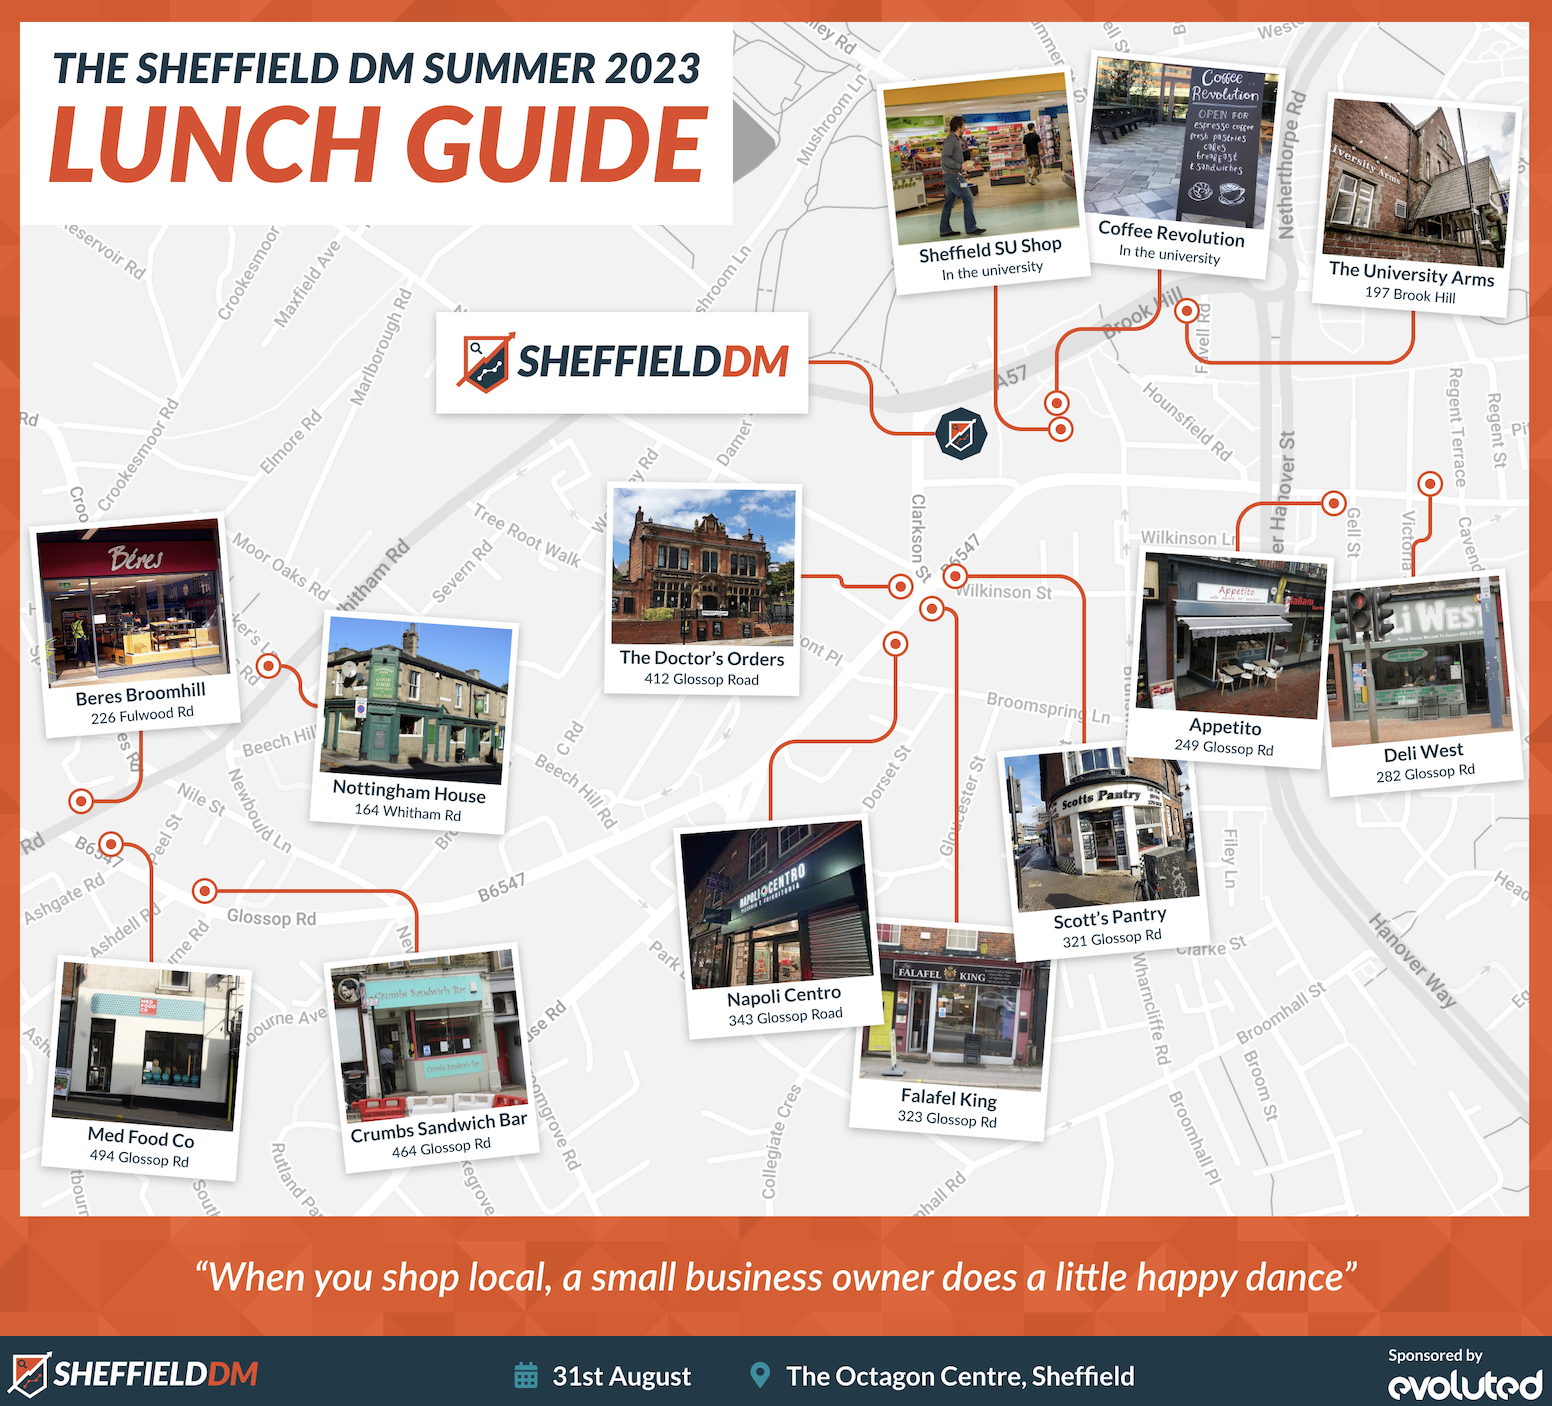 Sheffield DM Summer 2023 lunch guide map